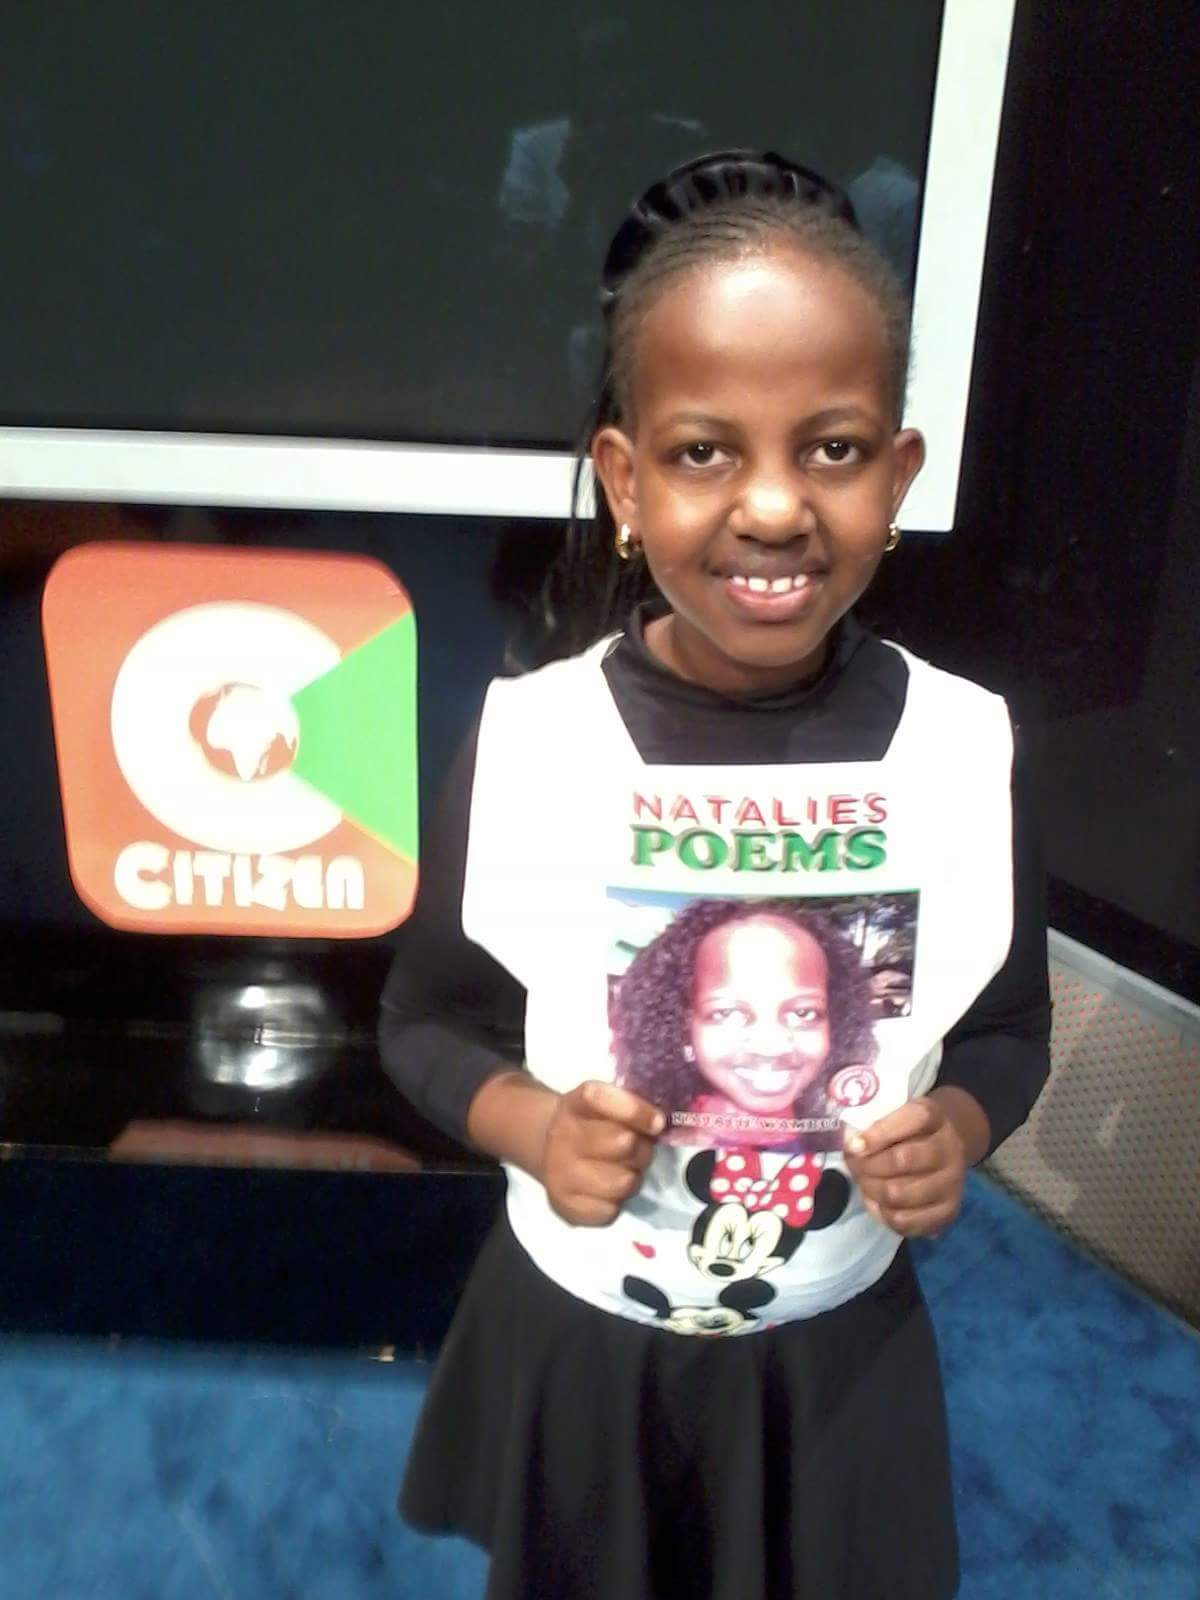 A Ten years old Author in Kenya የ ኣስር ኣመቷ ኬንያዊት 3 መፃህፍትን ለህትመት ኣበቃች  